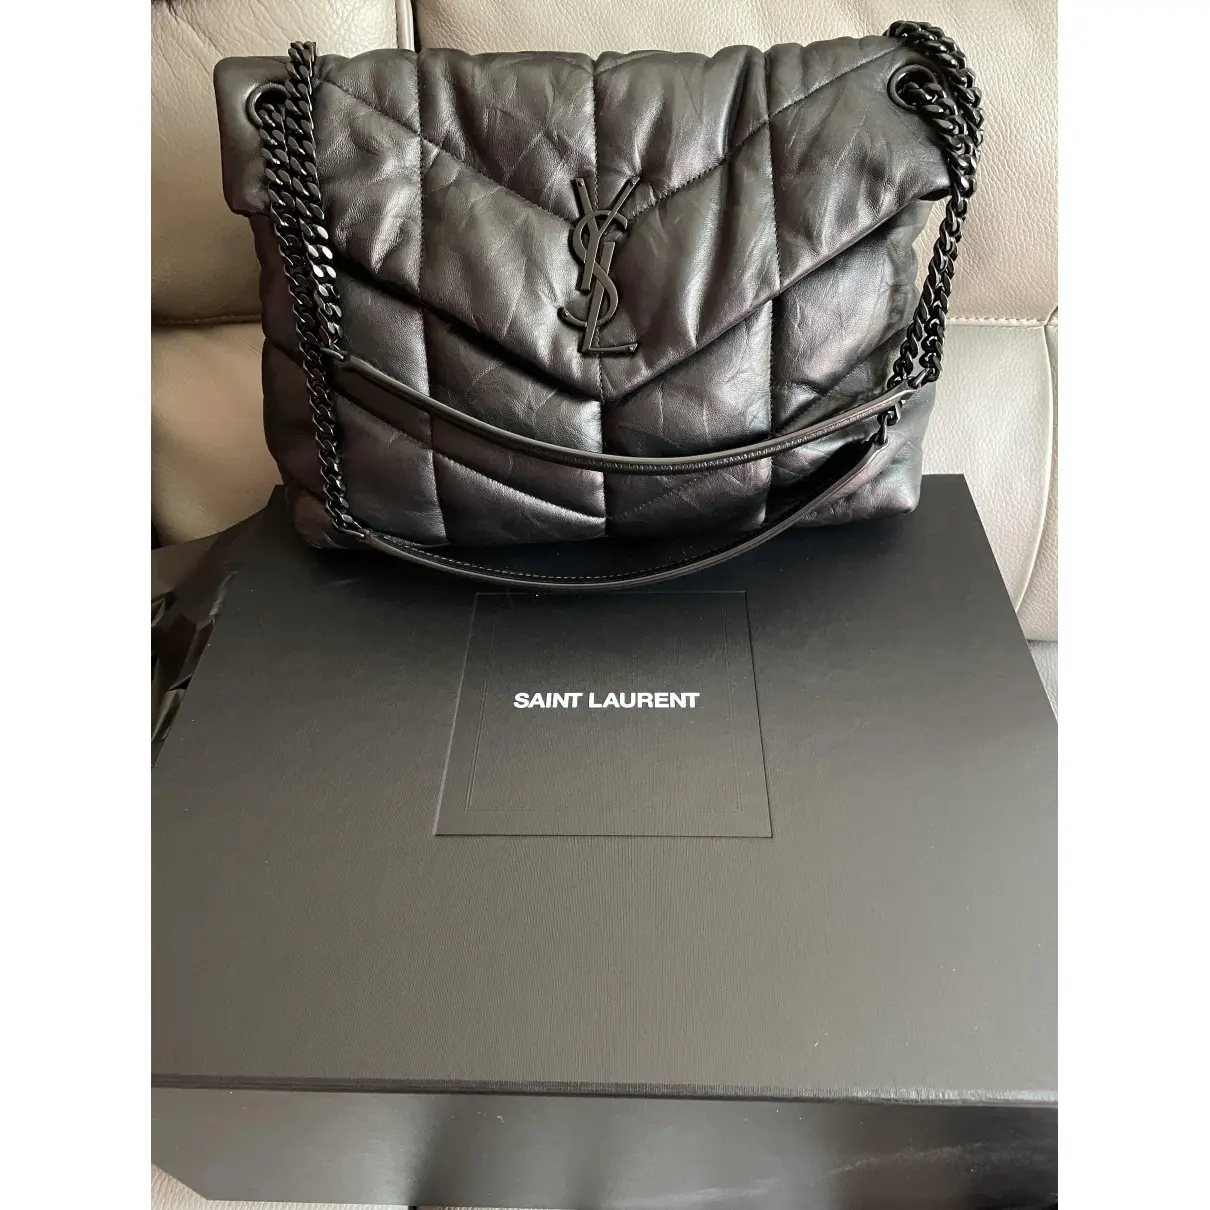 Buy Saint Laurent Loulou Puffer leather crossbody bag online